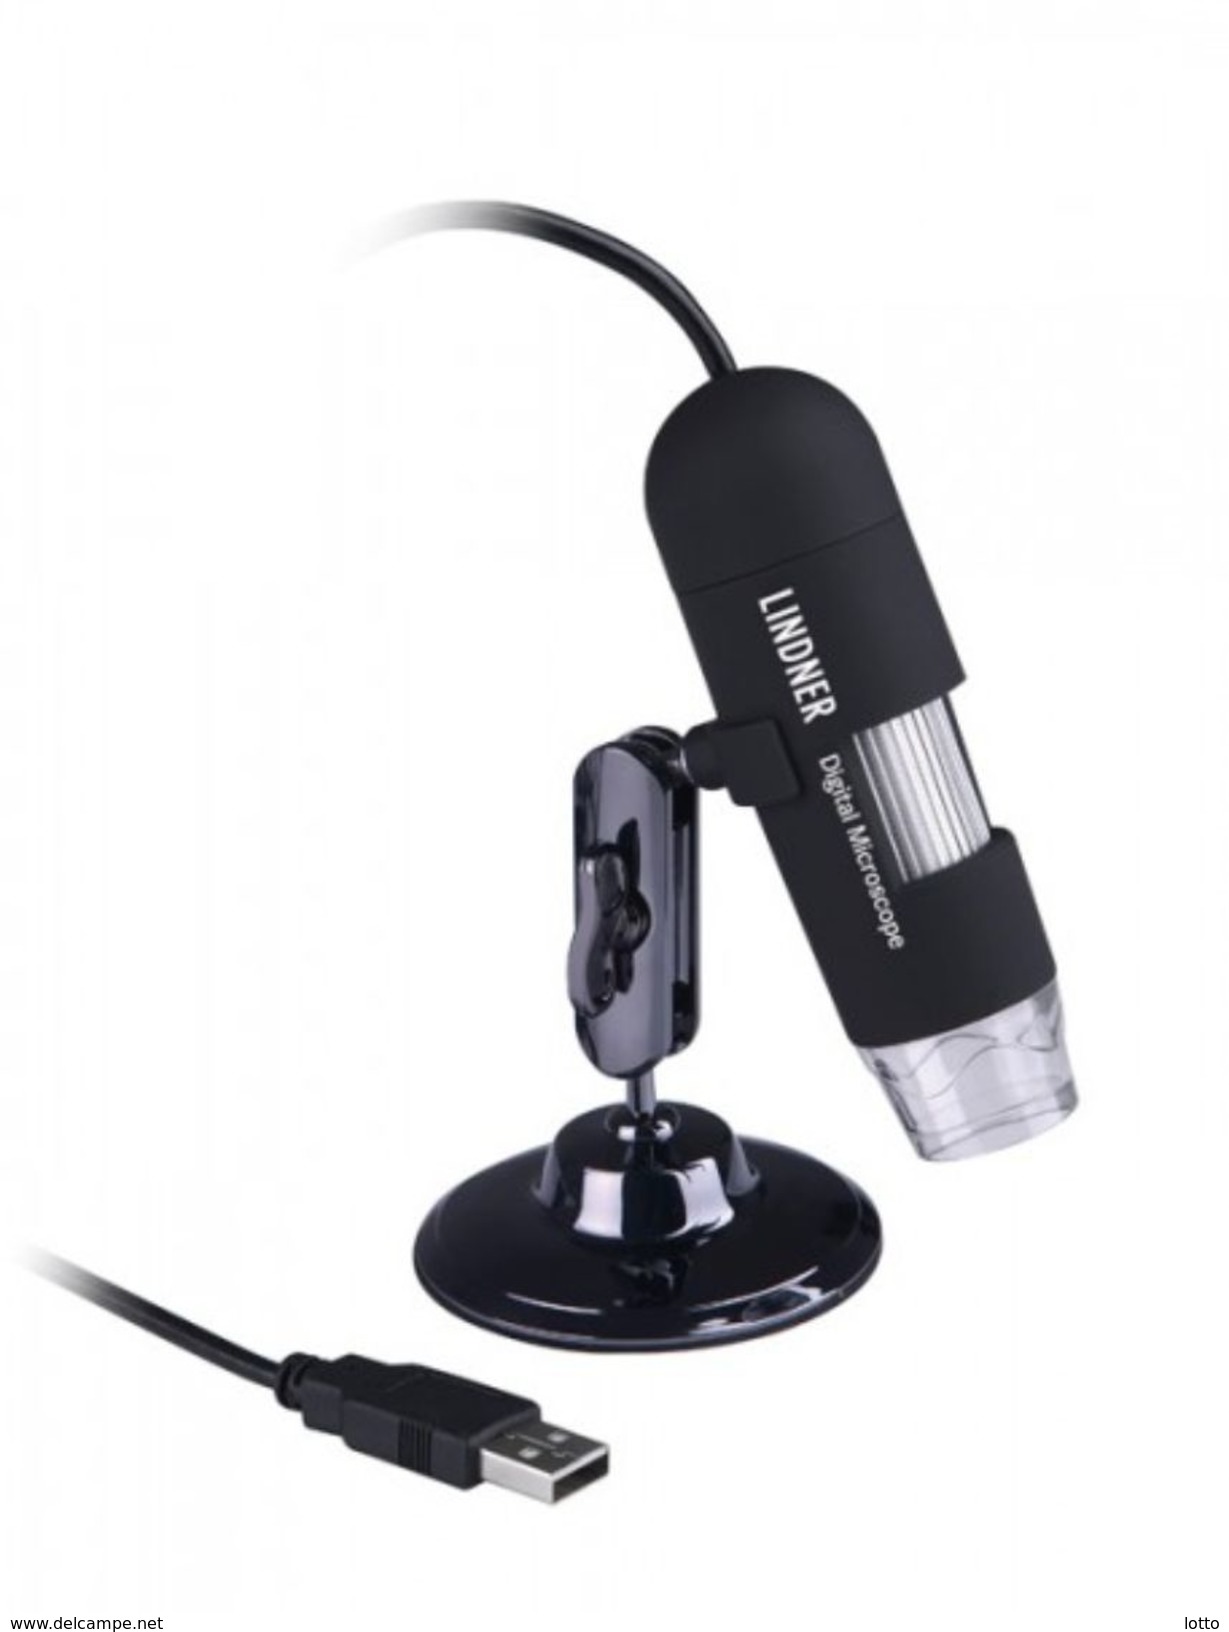 Lindner LINDNER USB Digital-Microscope V5, Empf. VP 110,00 +++ NEU OVP +++ (7155-V5) - Pinzetten, Lupen, Mikroskope